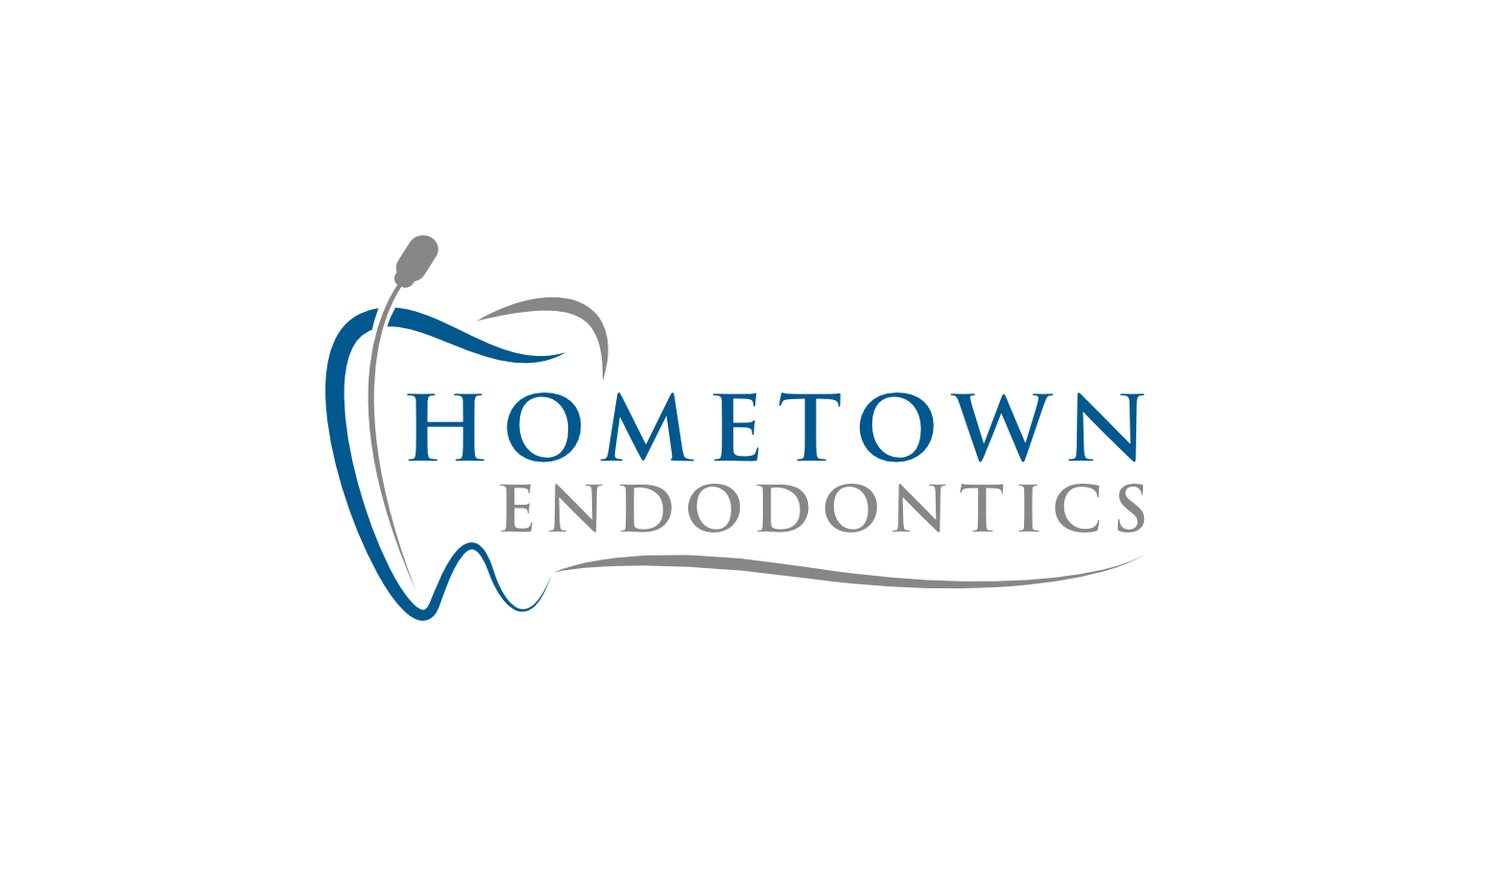 Hometown Endodontics